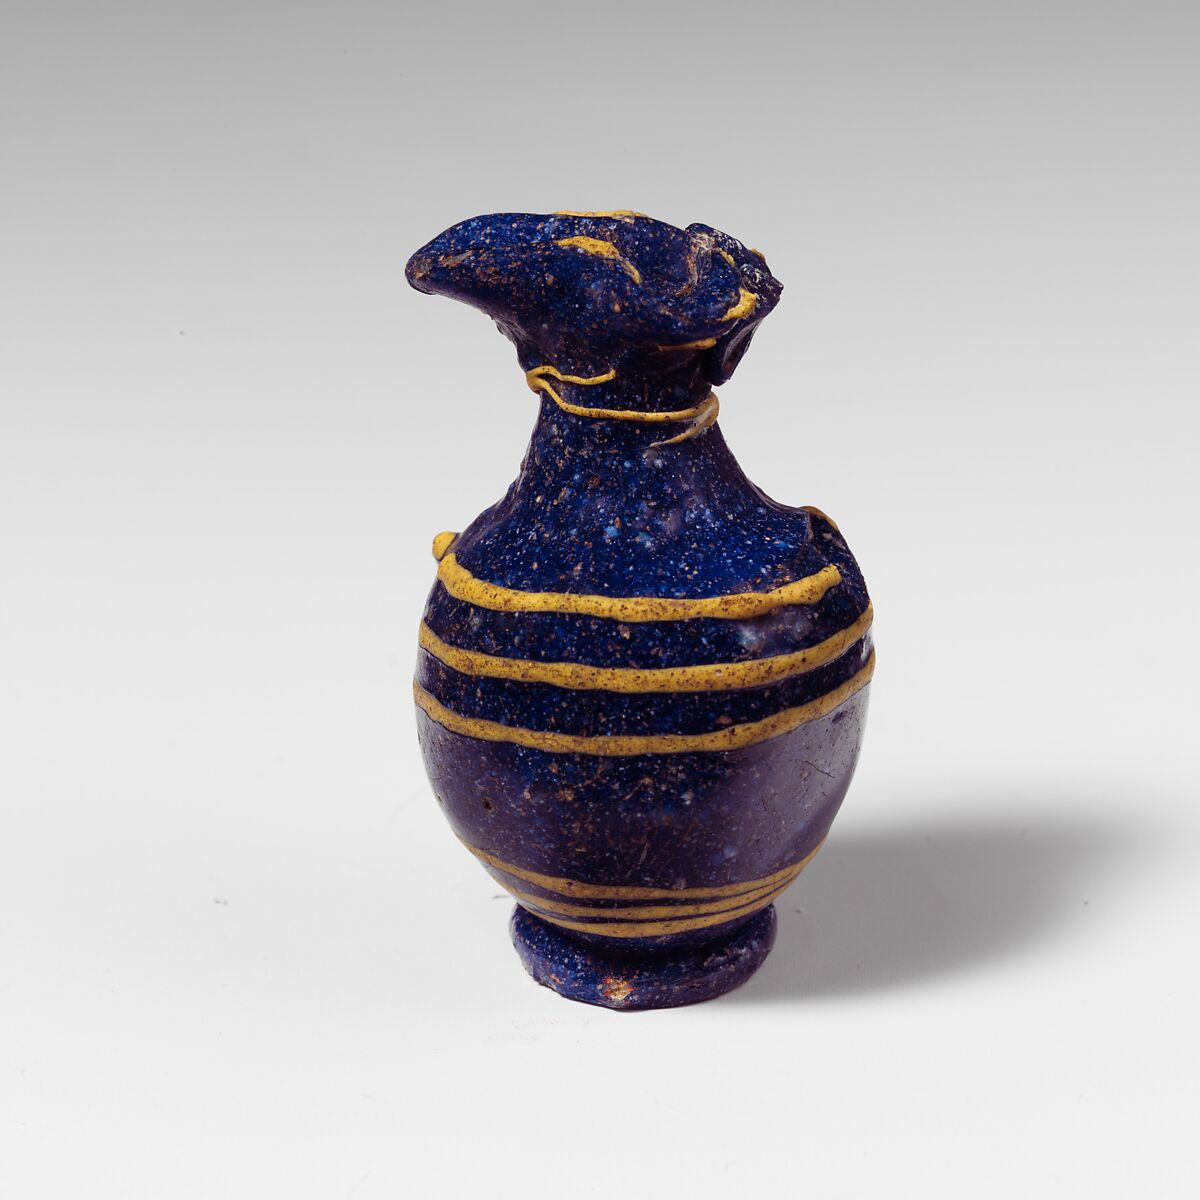 Glass oinochoe (perfume jug), Glass, Eastern Mediterranean or Italian 